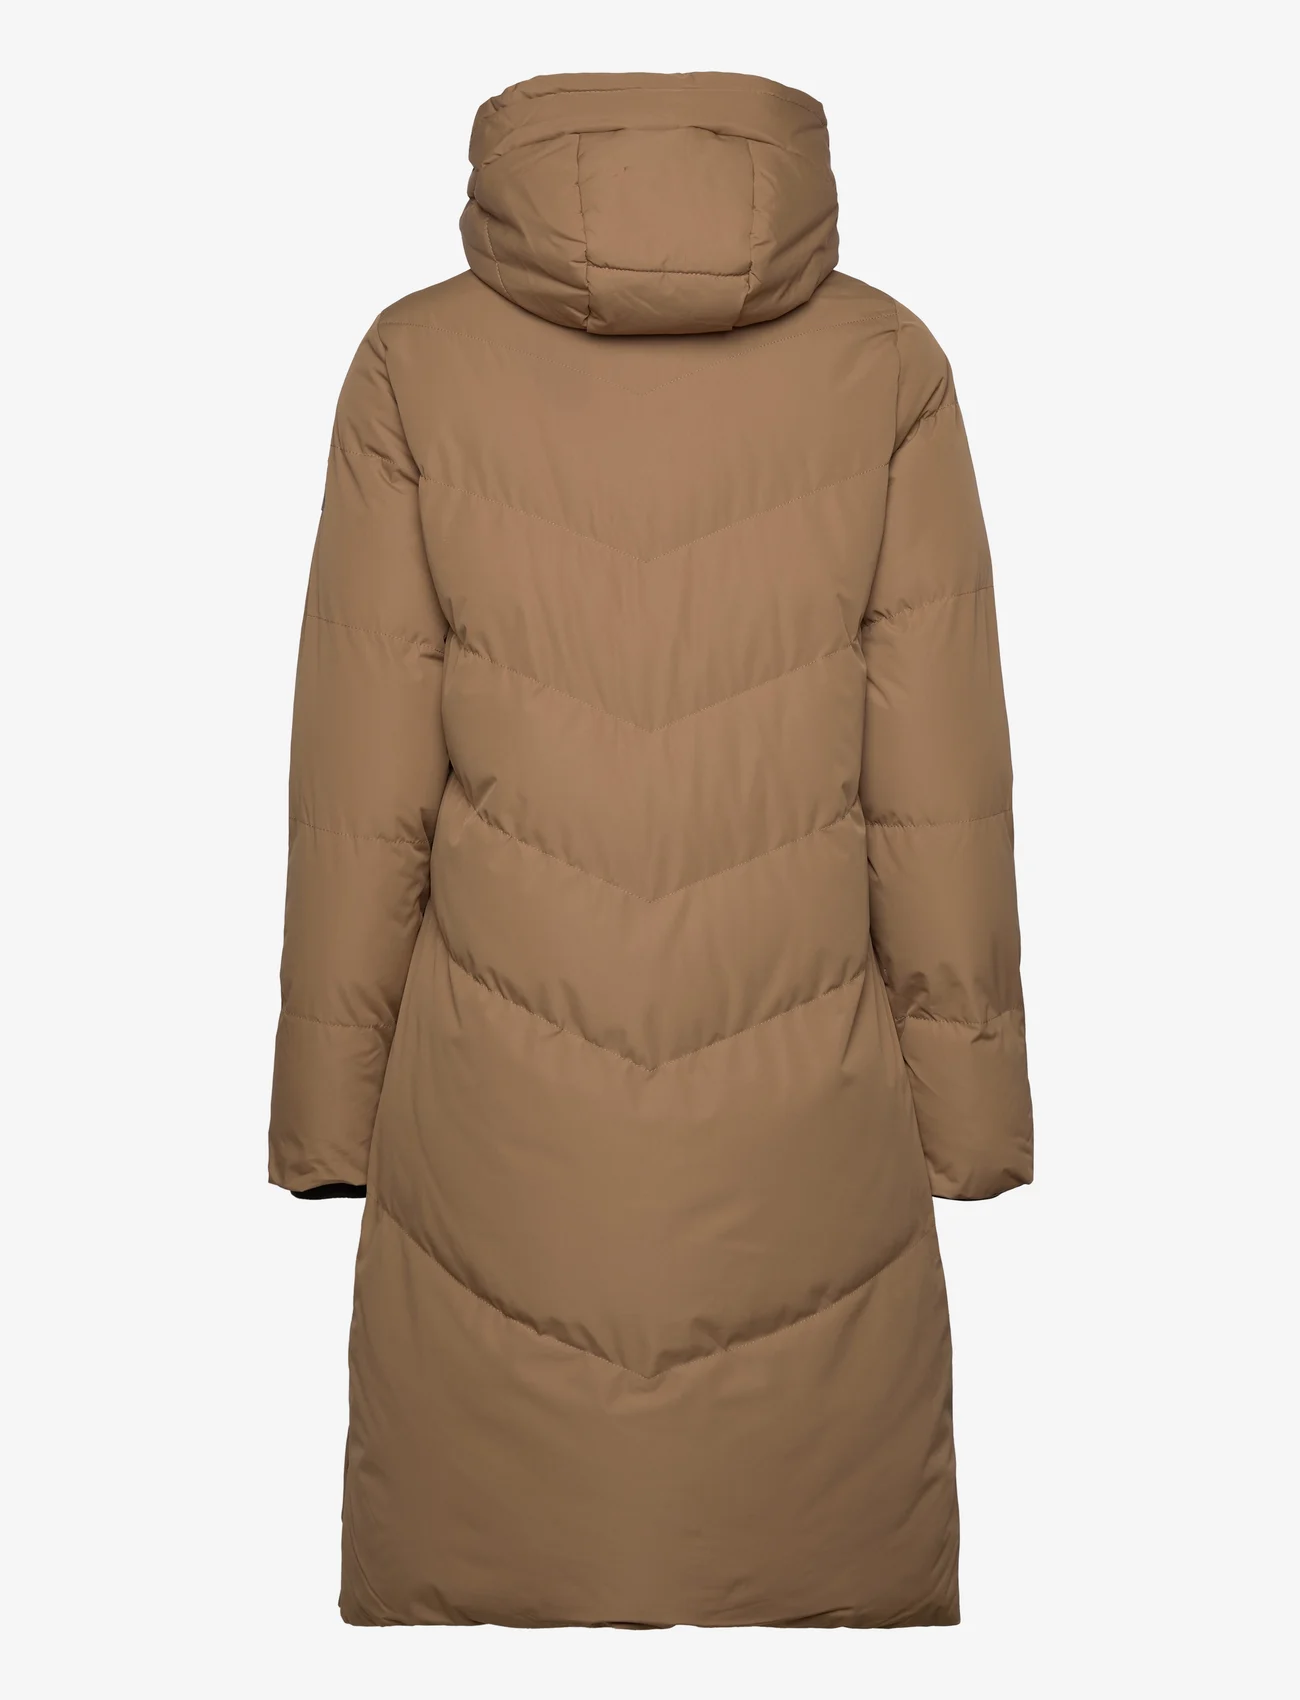 Garcia - ladies outdoor jackets - winter jackets - brown - 1